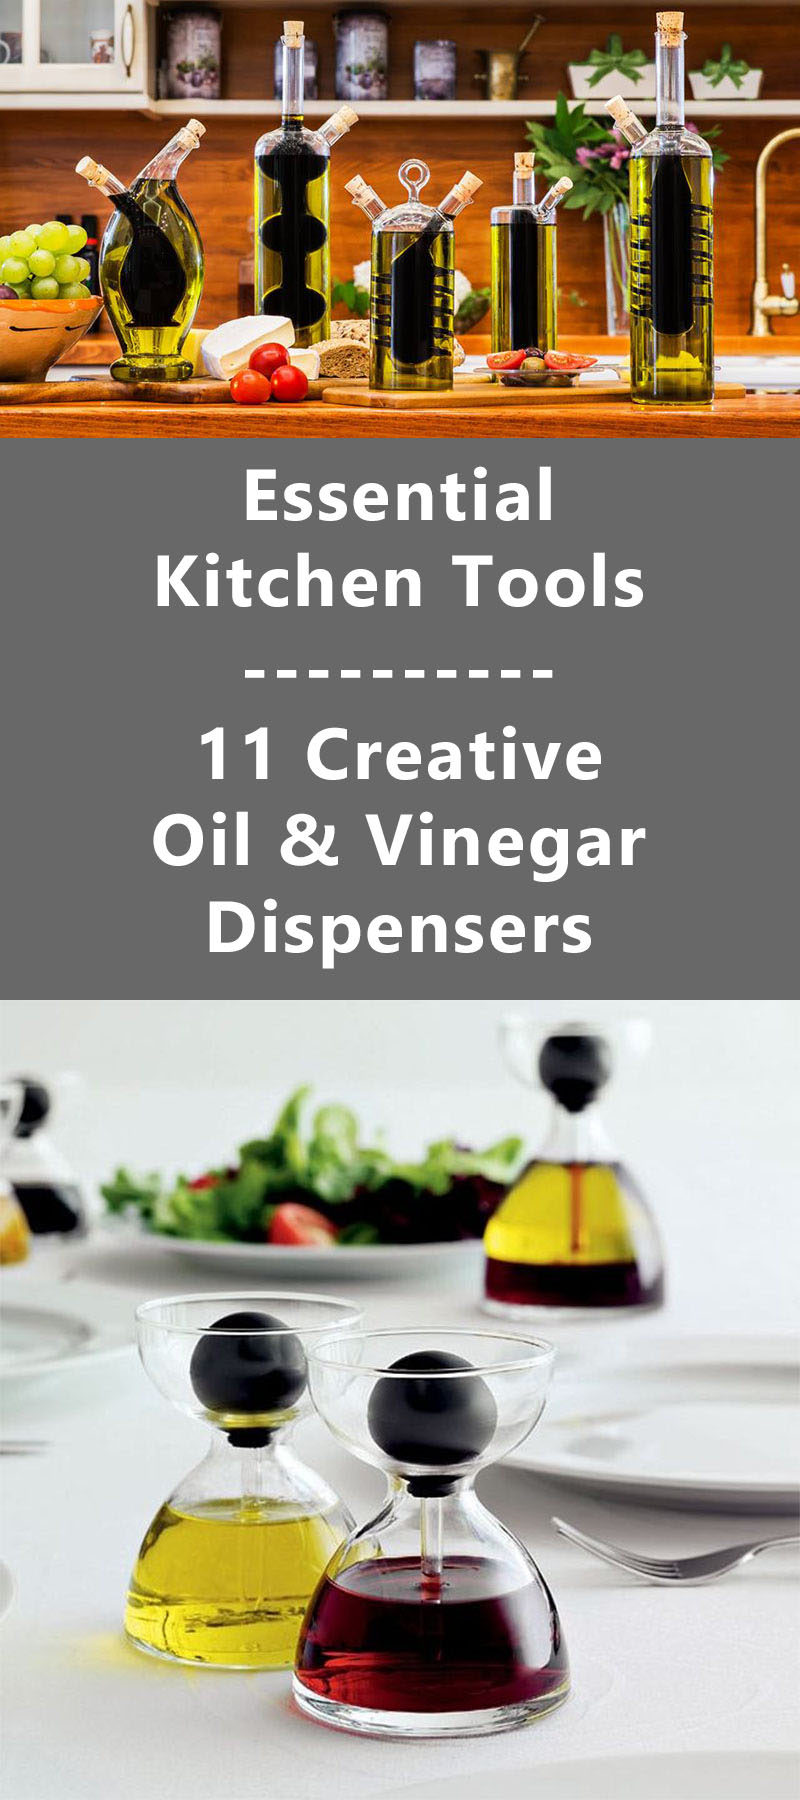 Essential Kitchen Tools - 11 Creative Oil & Vinegar Dispensers